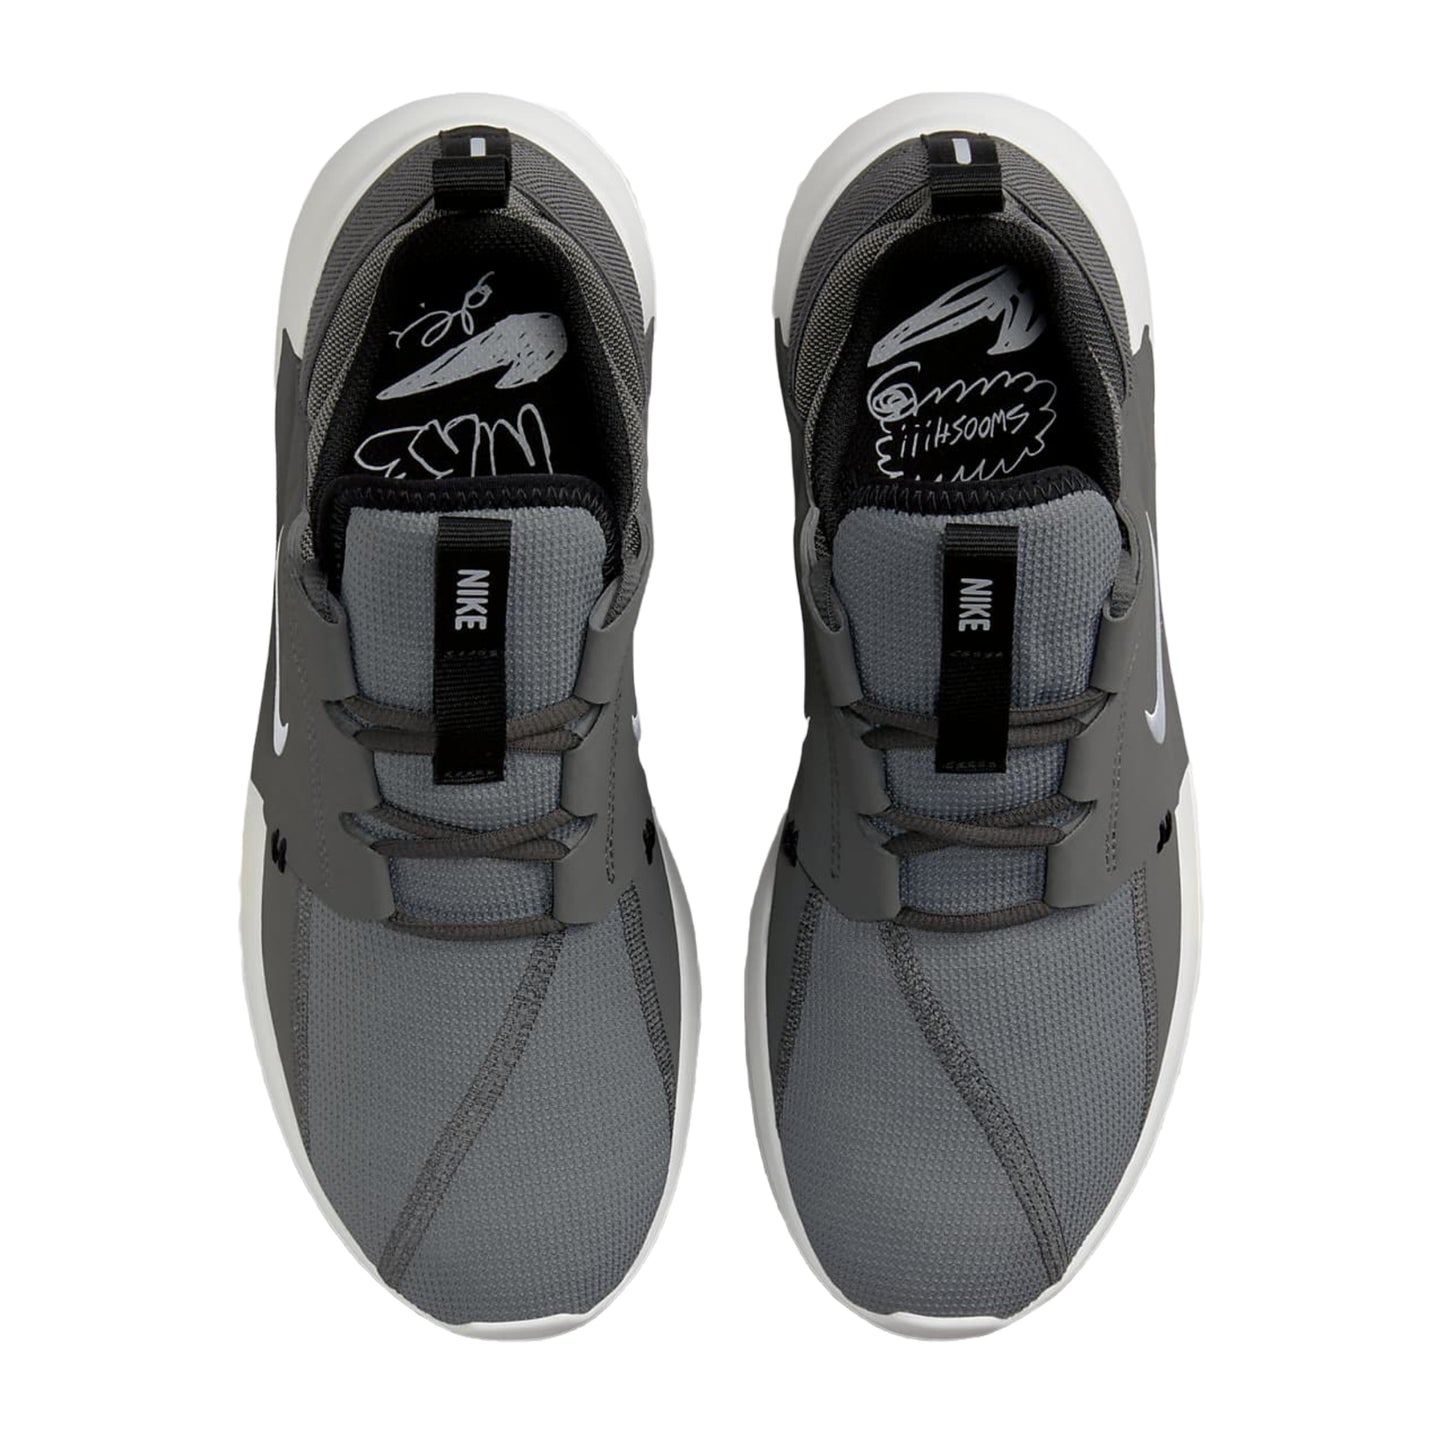 Nike E-Series AD Men's Shoes Grey